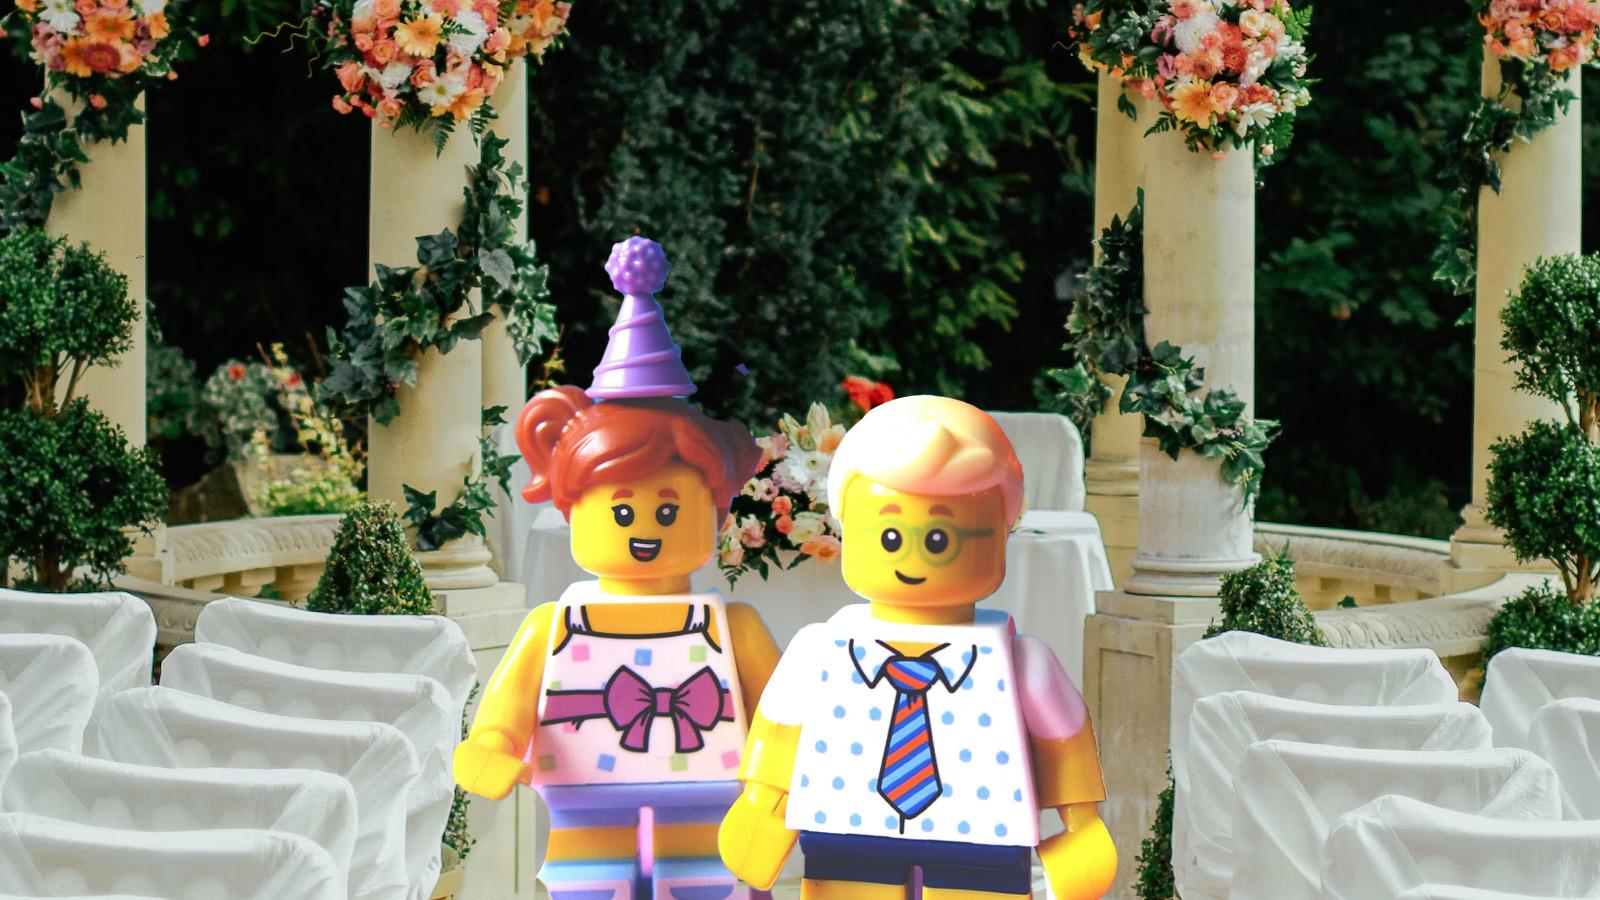 Wedding TikTok has viewers falling in love with LEGO idea